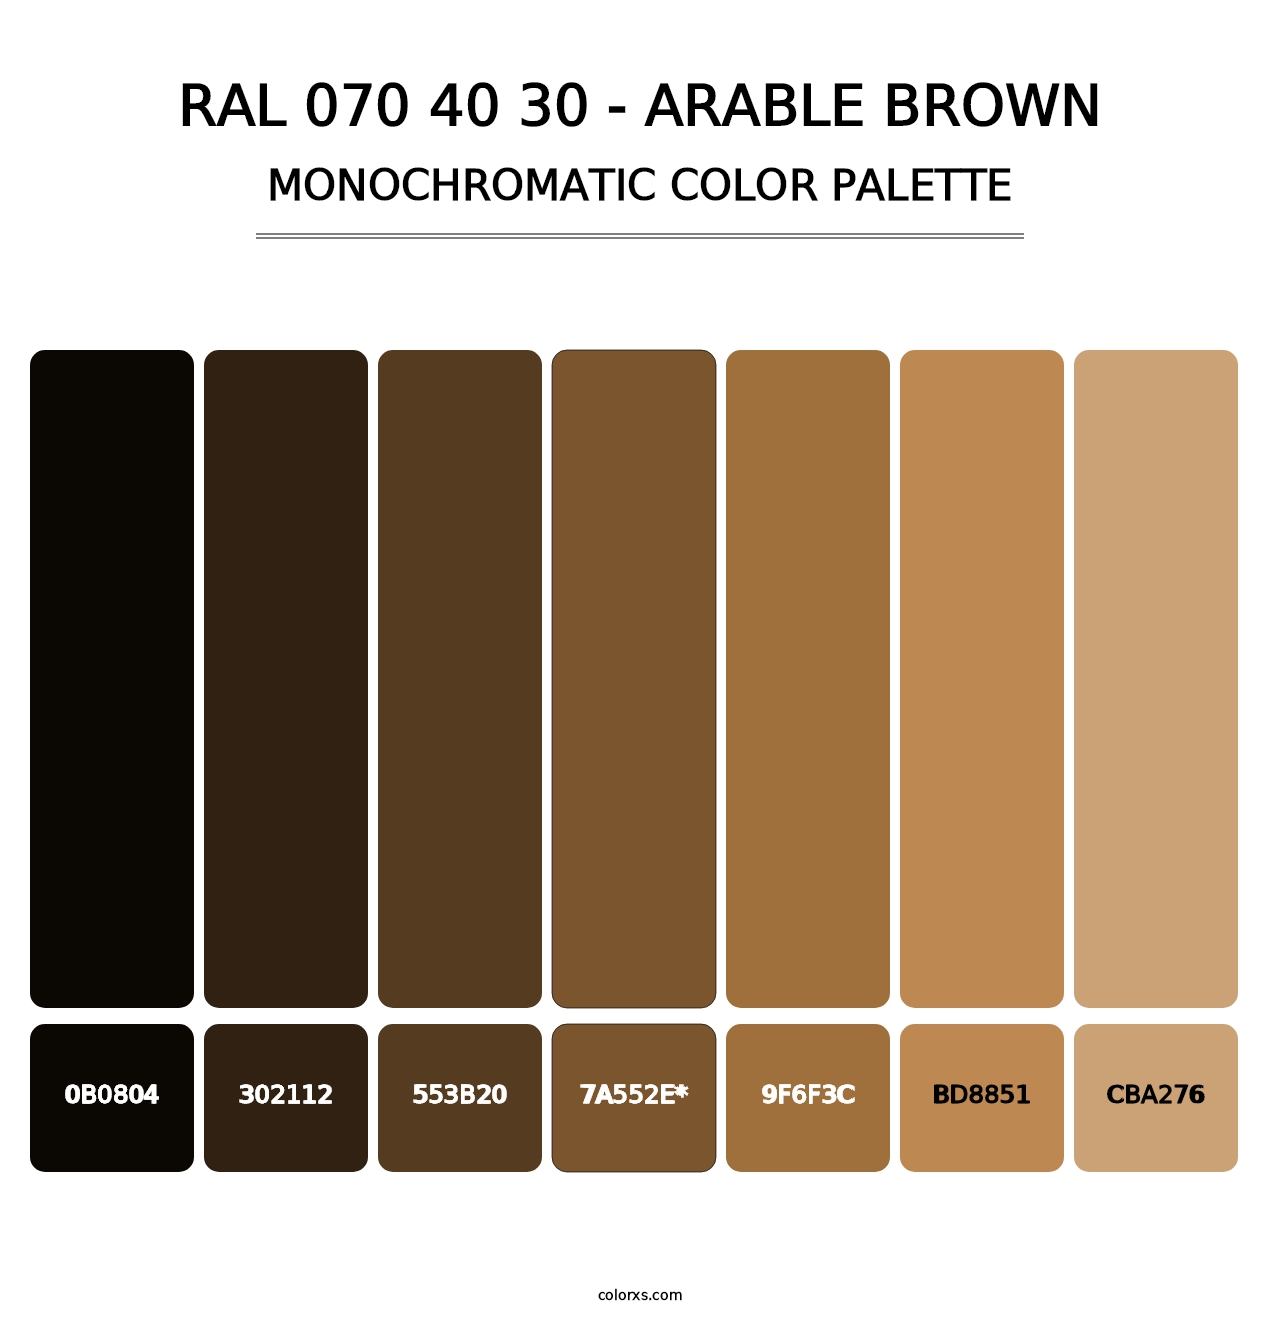 RAL 070 40 30 - Arable Brown - Monochromatic Color Palette